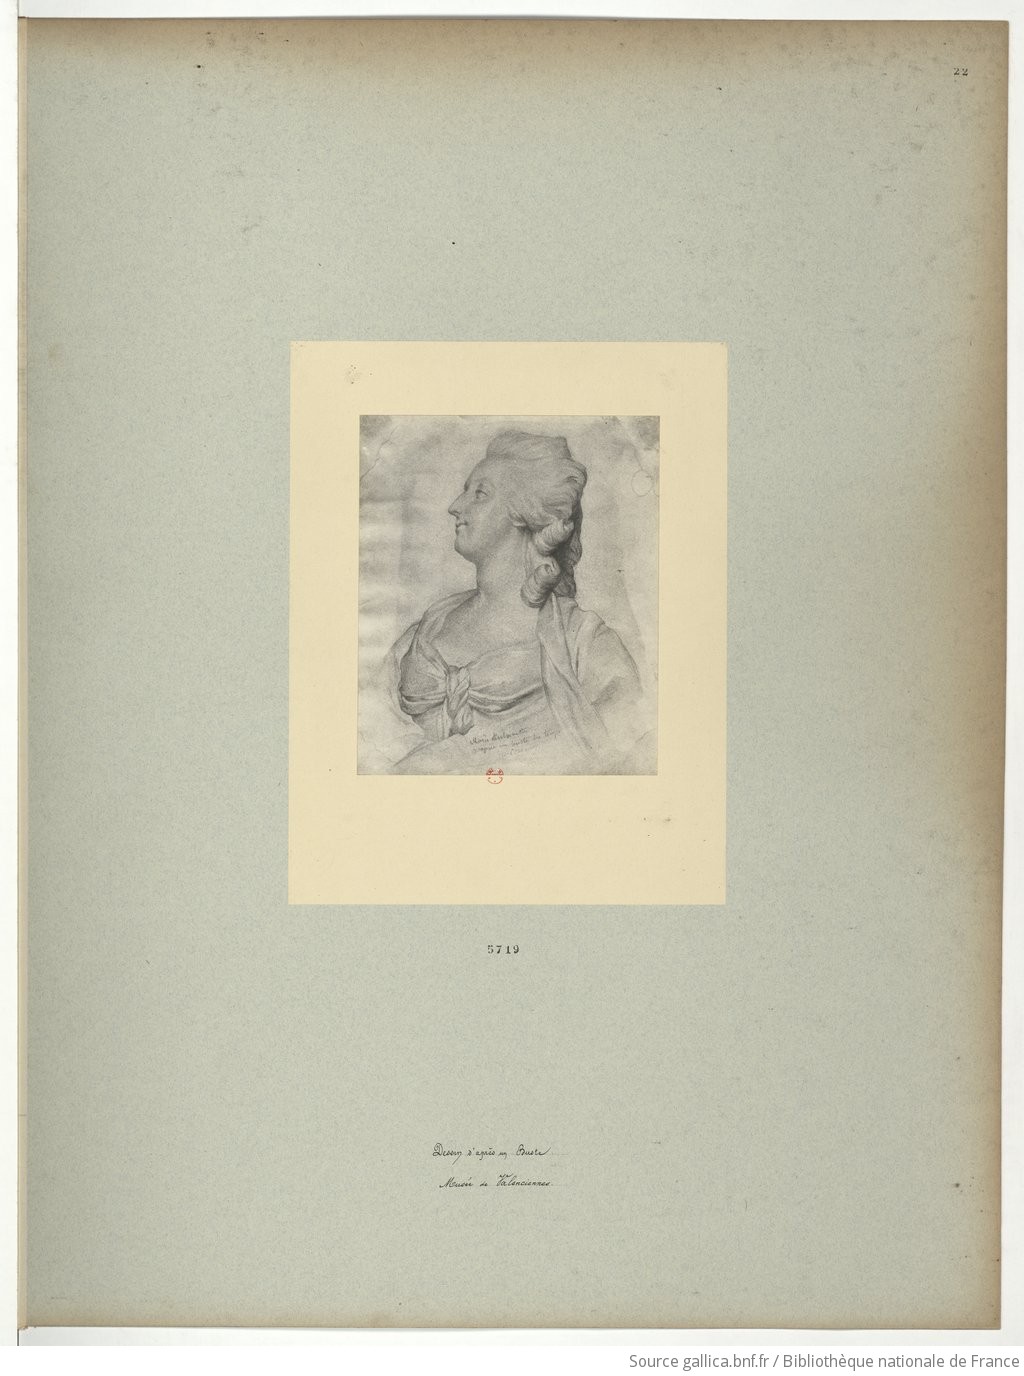 Portraits de Marie-Antoinette en buste F1